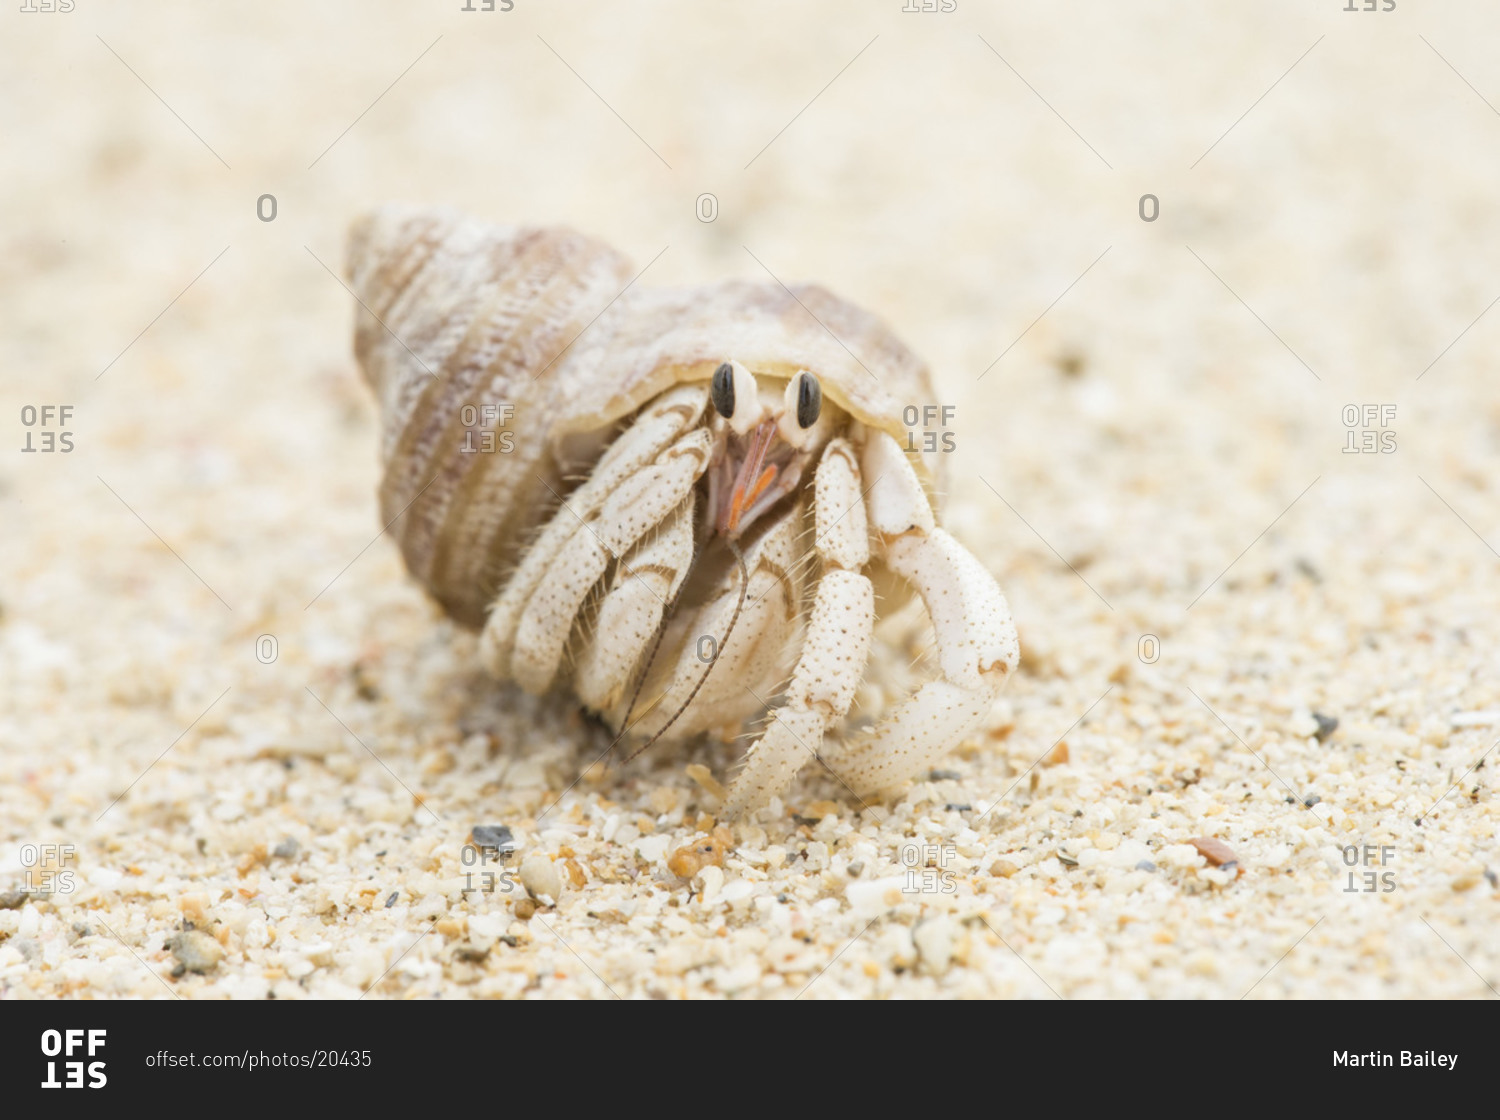 Hermit crab in shell on beach at Nakadomari in Okinawa, Japan